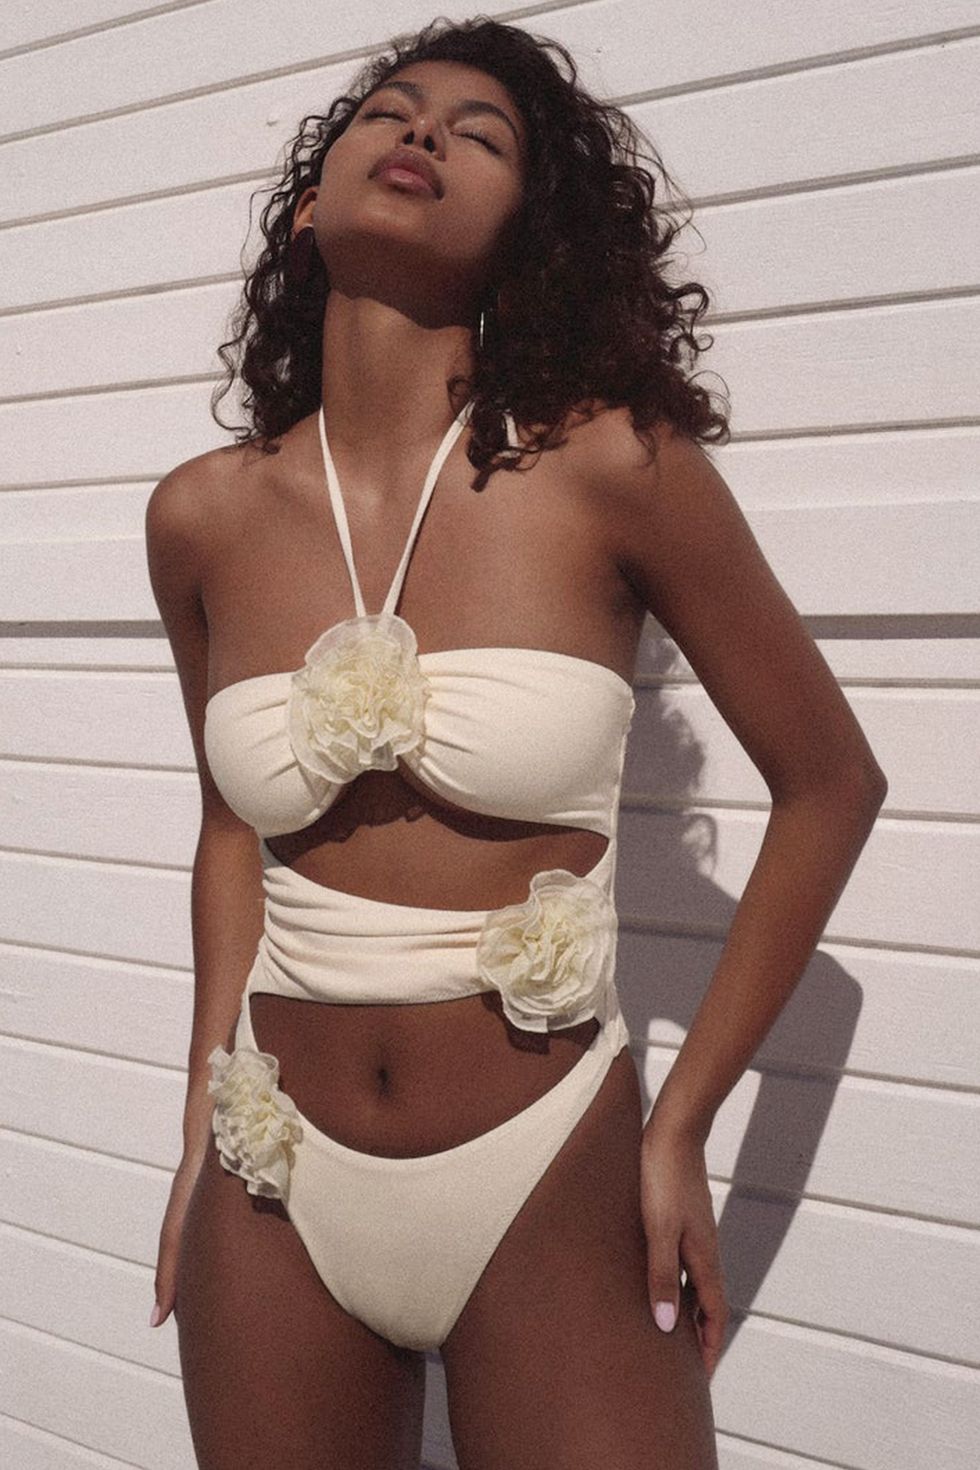 Celebs Wearing White Bikinis & Swimsuits: Pics Of Eva Longoria